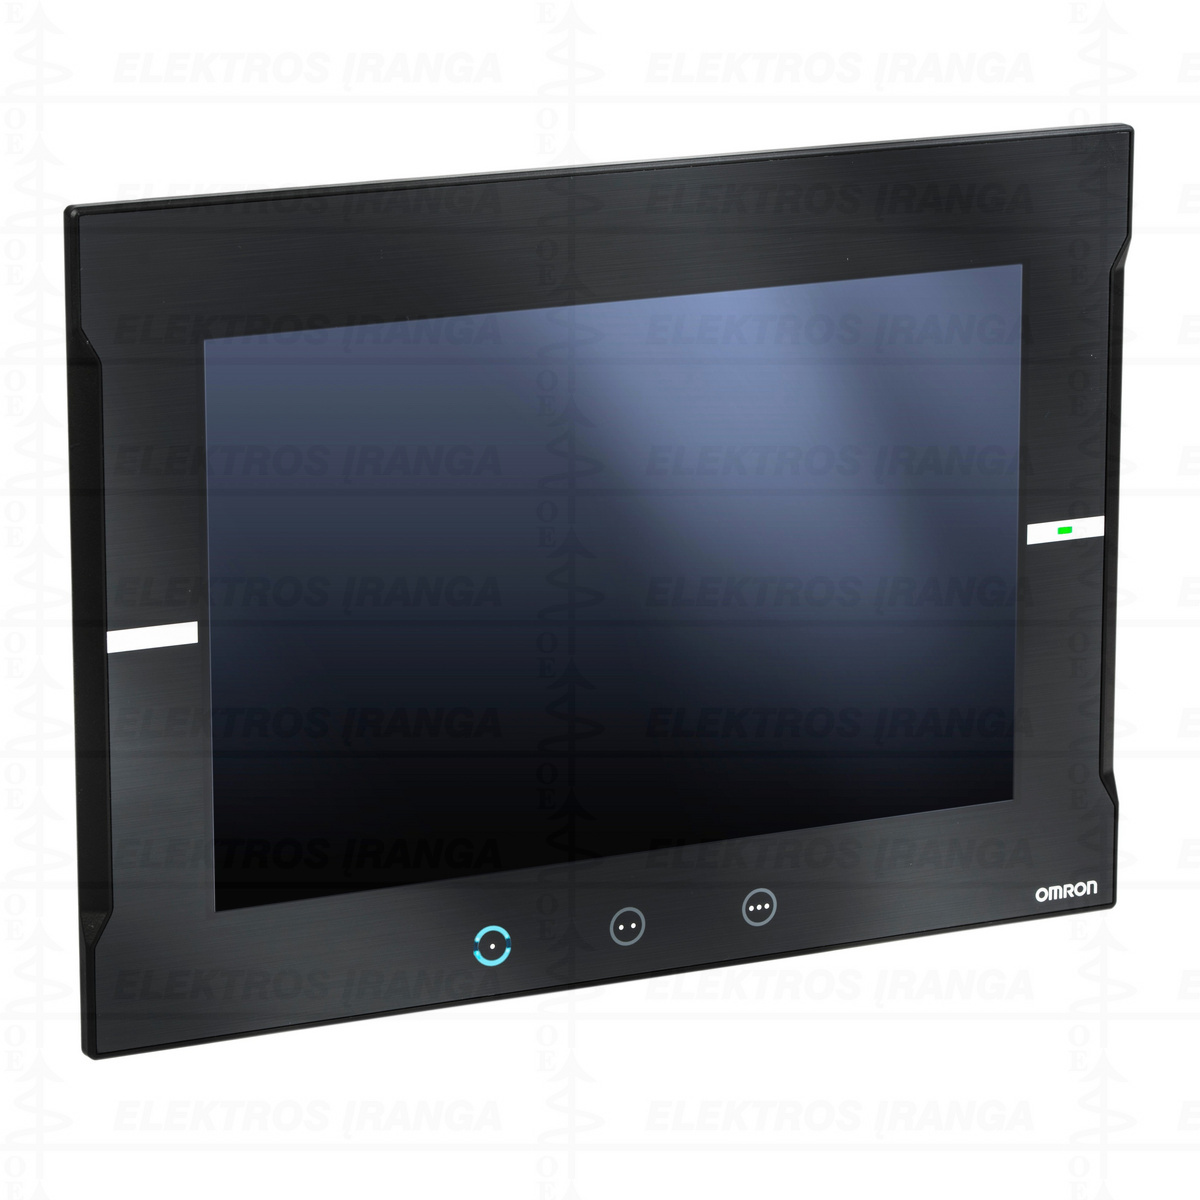 Valdymo terminalas prisilietimui jautriu ekranu, 12.1 colio (1280 x 800 px.) TFT LCD, 24 bit spalvos , Ethernet, USB, SD, ser.port, juodas